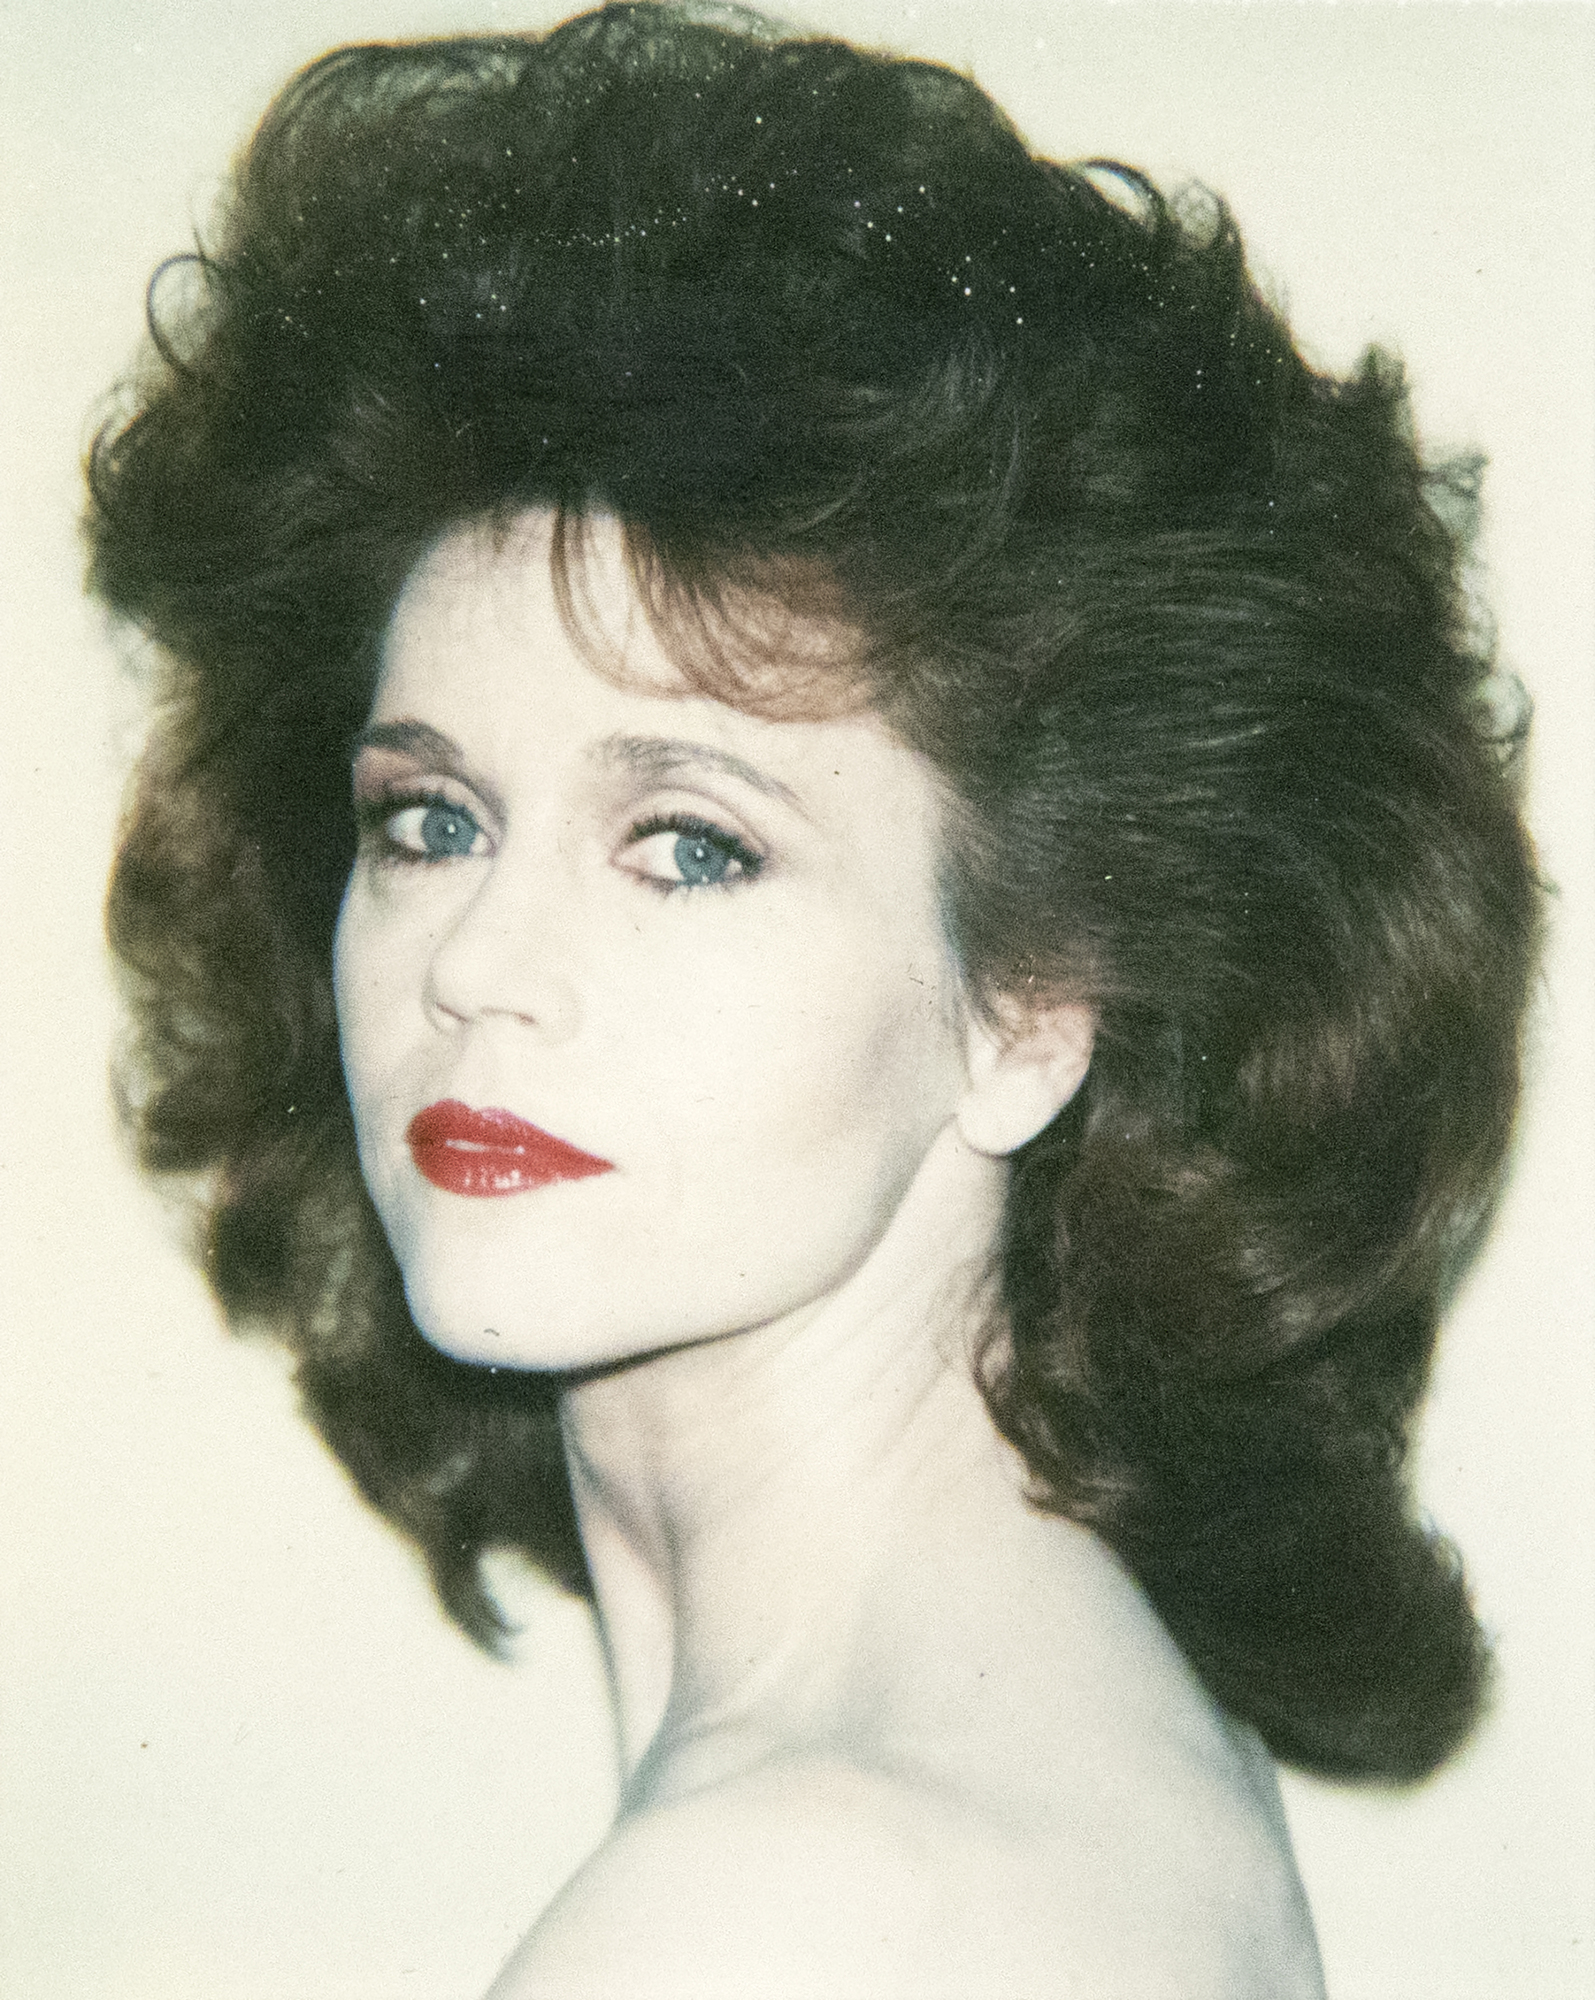 ANDY WARHOL - Jane Fonda - Polaroid, Polacolor - 4 1/4 x 3 3/8 in.